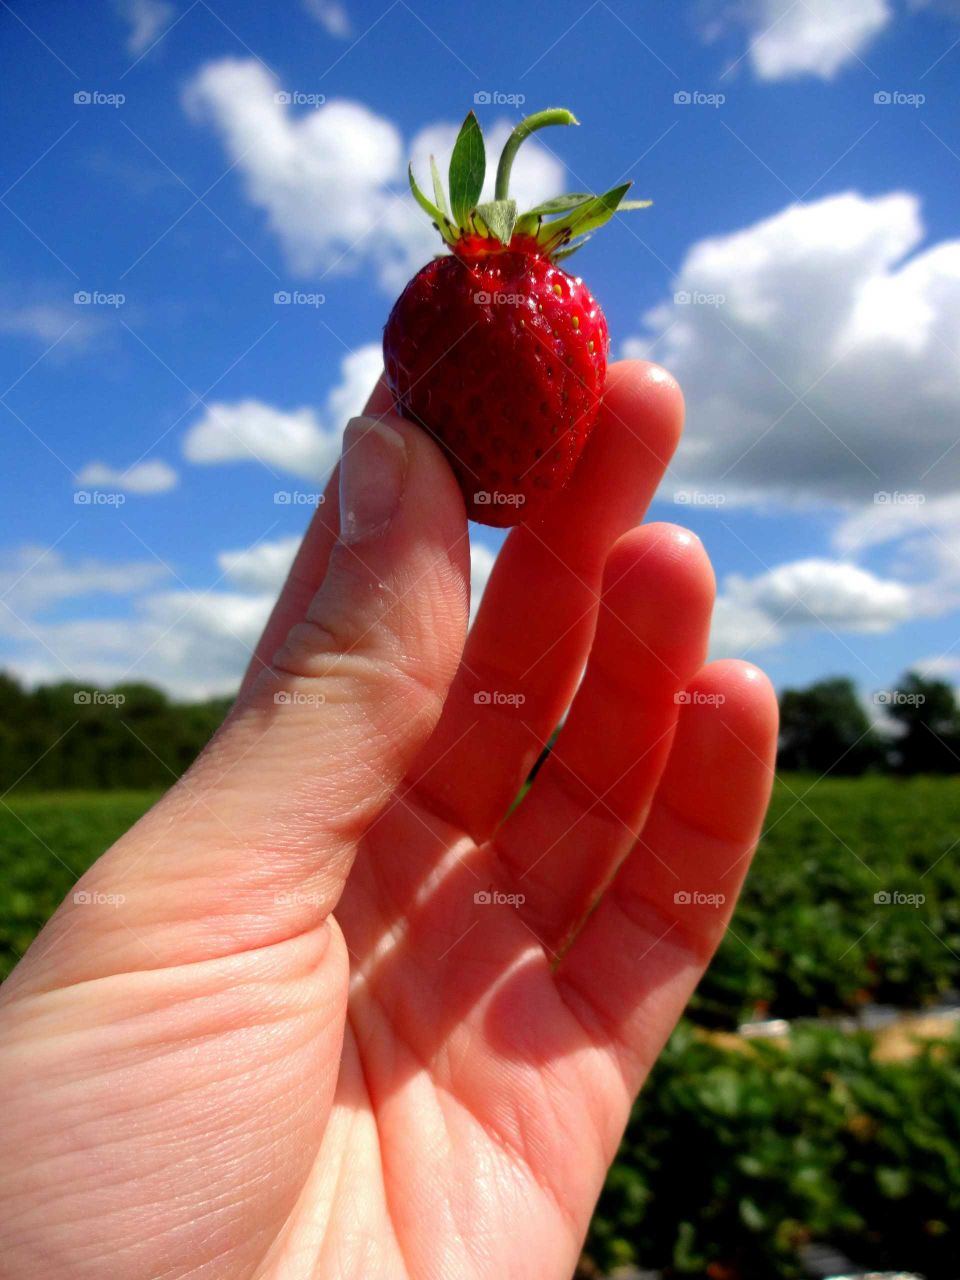 strawberry. season for strawberries